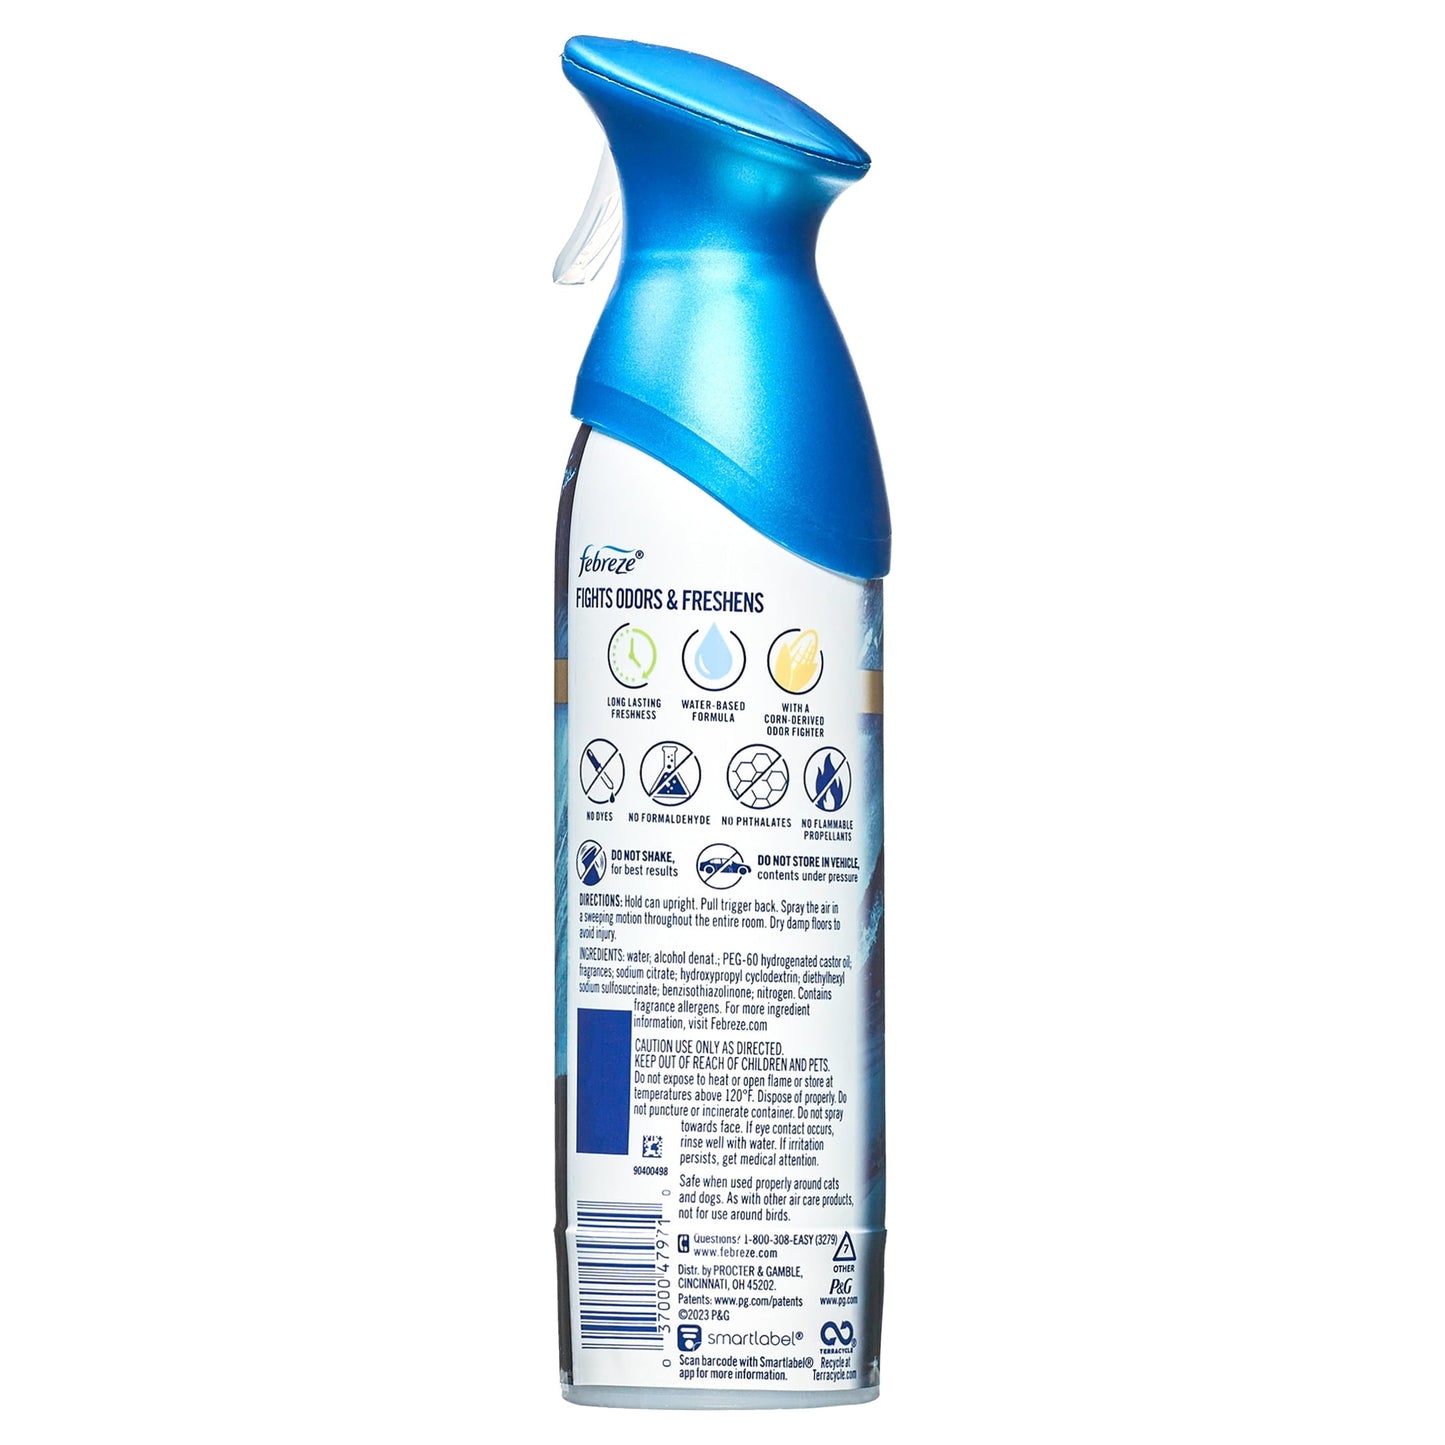 Febreze Odor-Fighting Air Freshener, Ocean, 2 count, 8.8 fl oz each